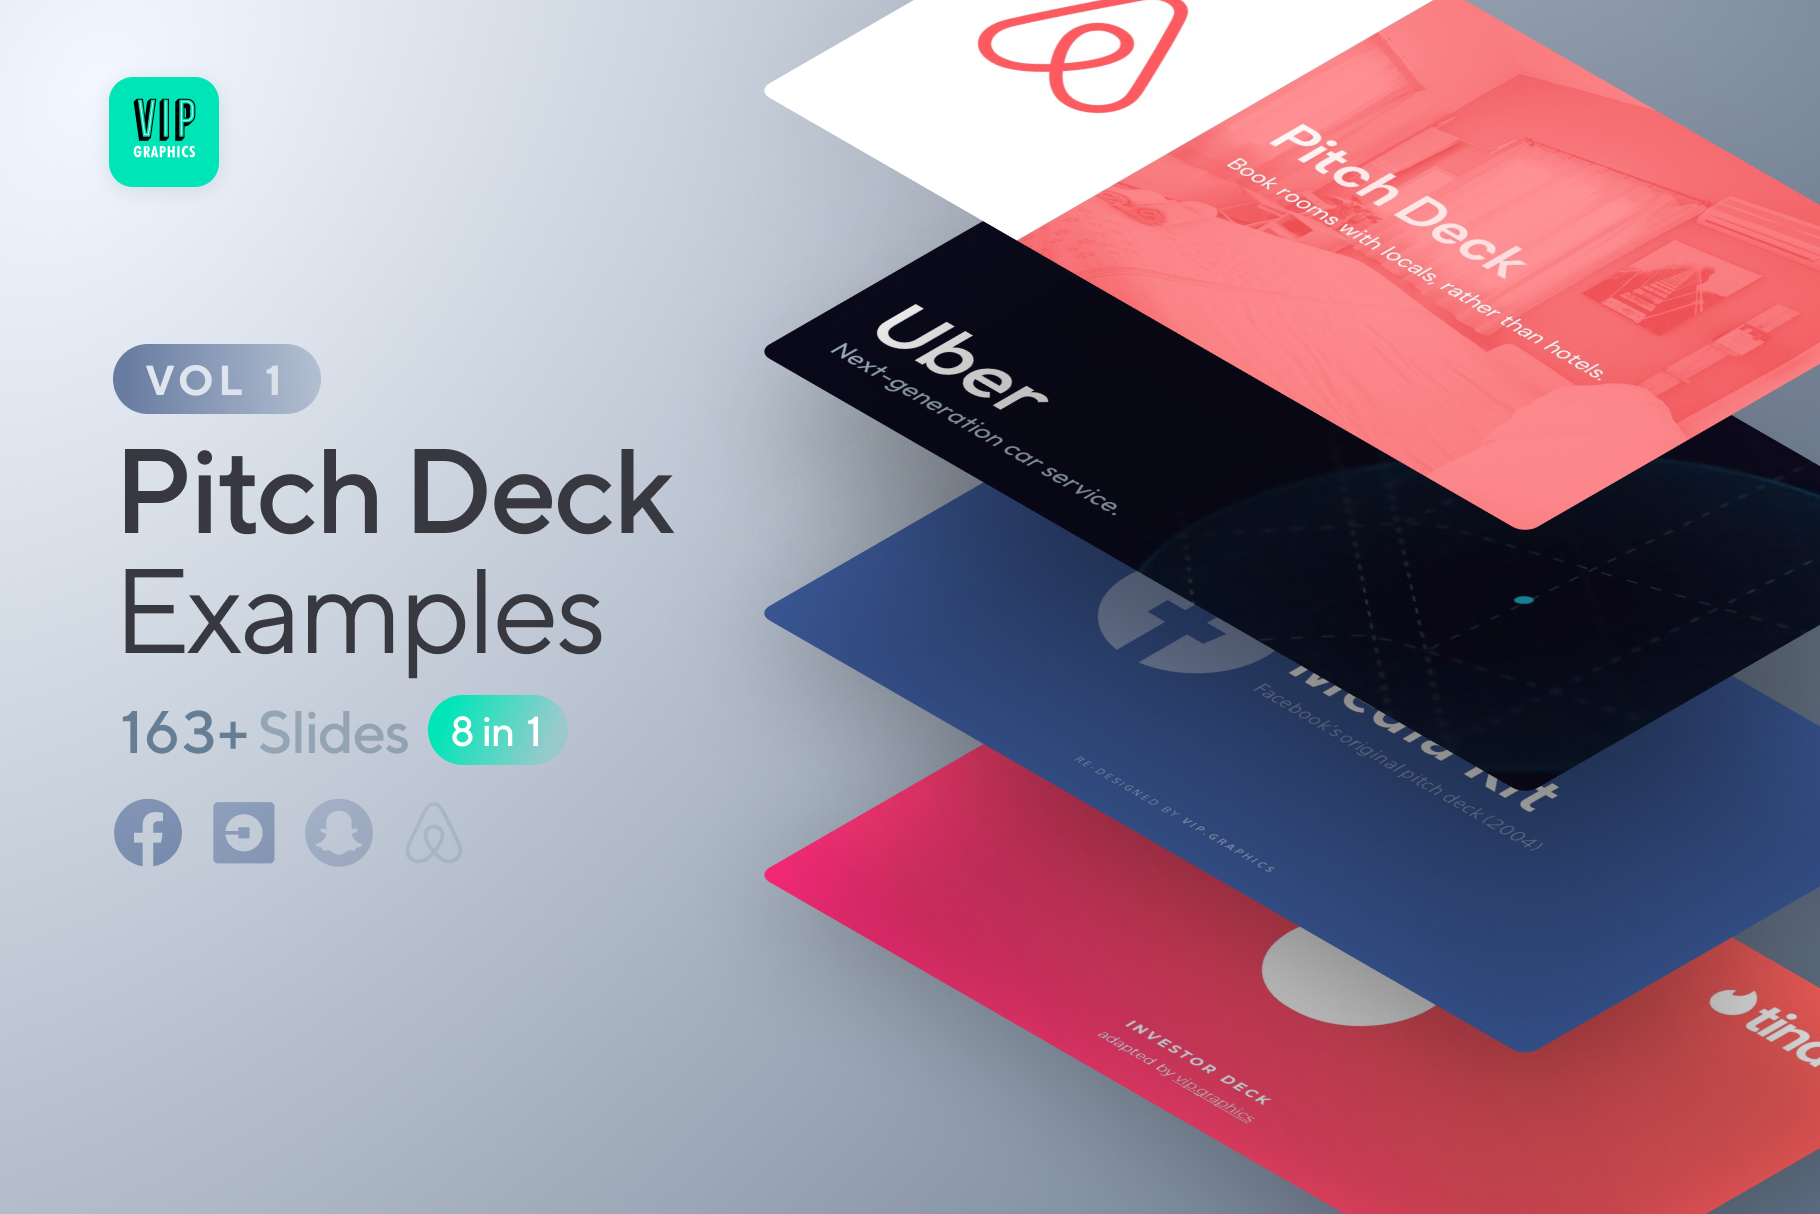 Pitch Deck Examples Template Bundle (Vol. 1)